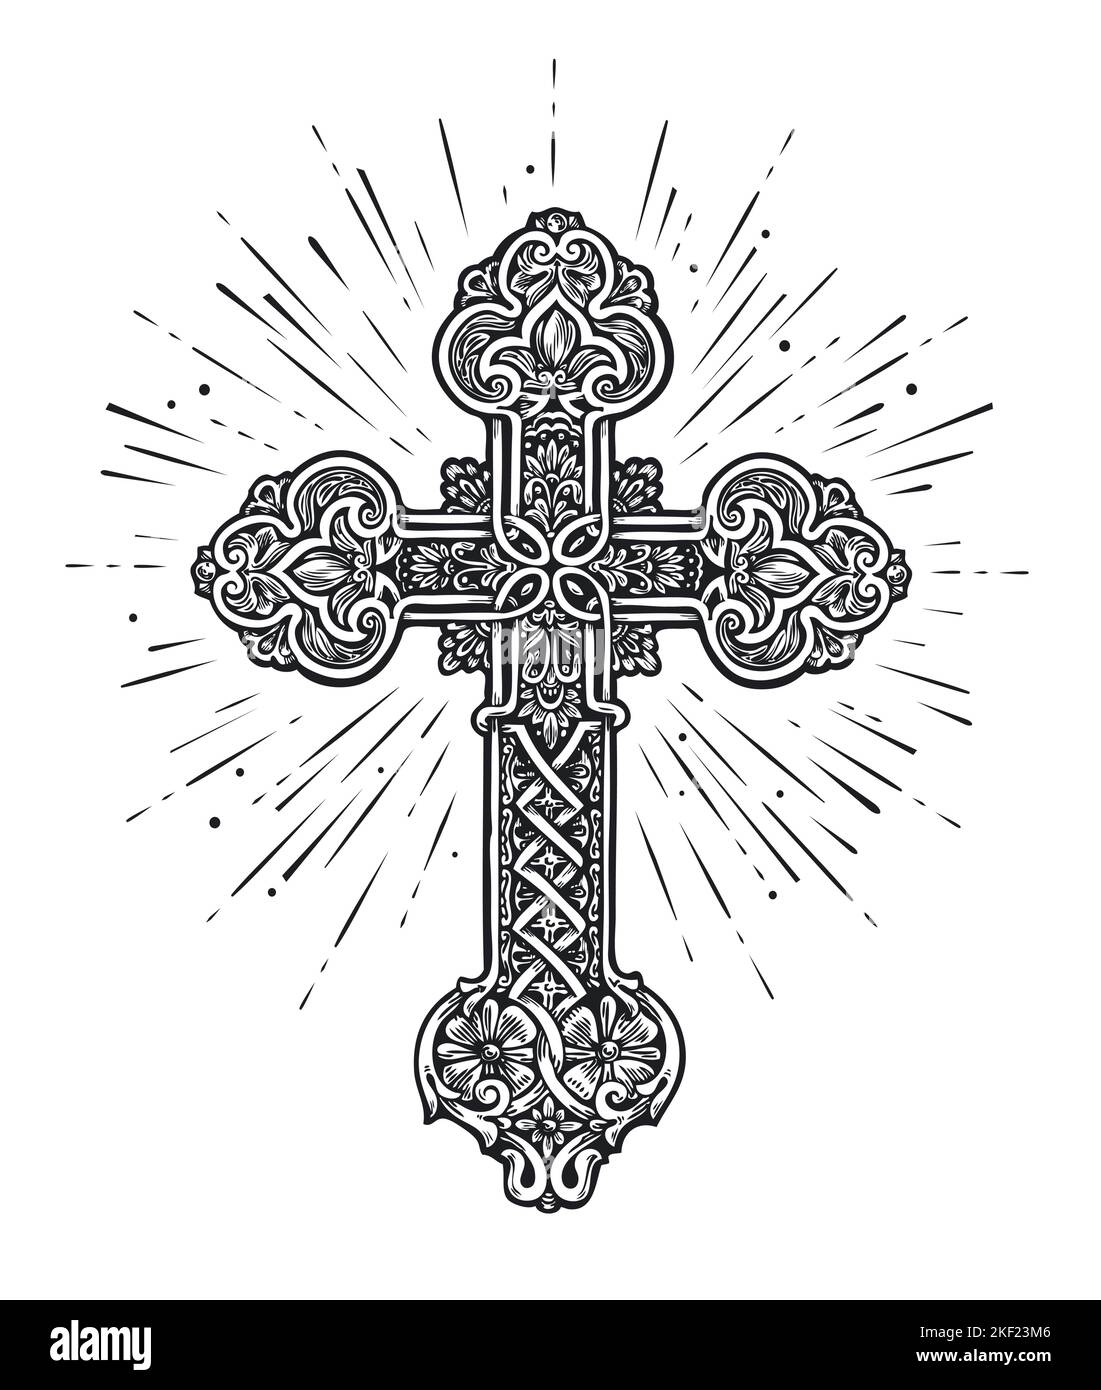 Ornate Christian Cross. Church, Faith in God, Christianity religion symbol. Illustration in vintage engraving style Stock Vector